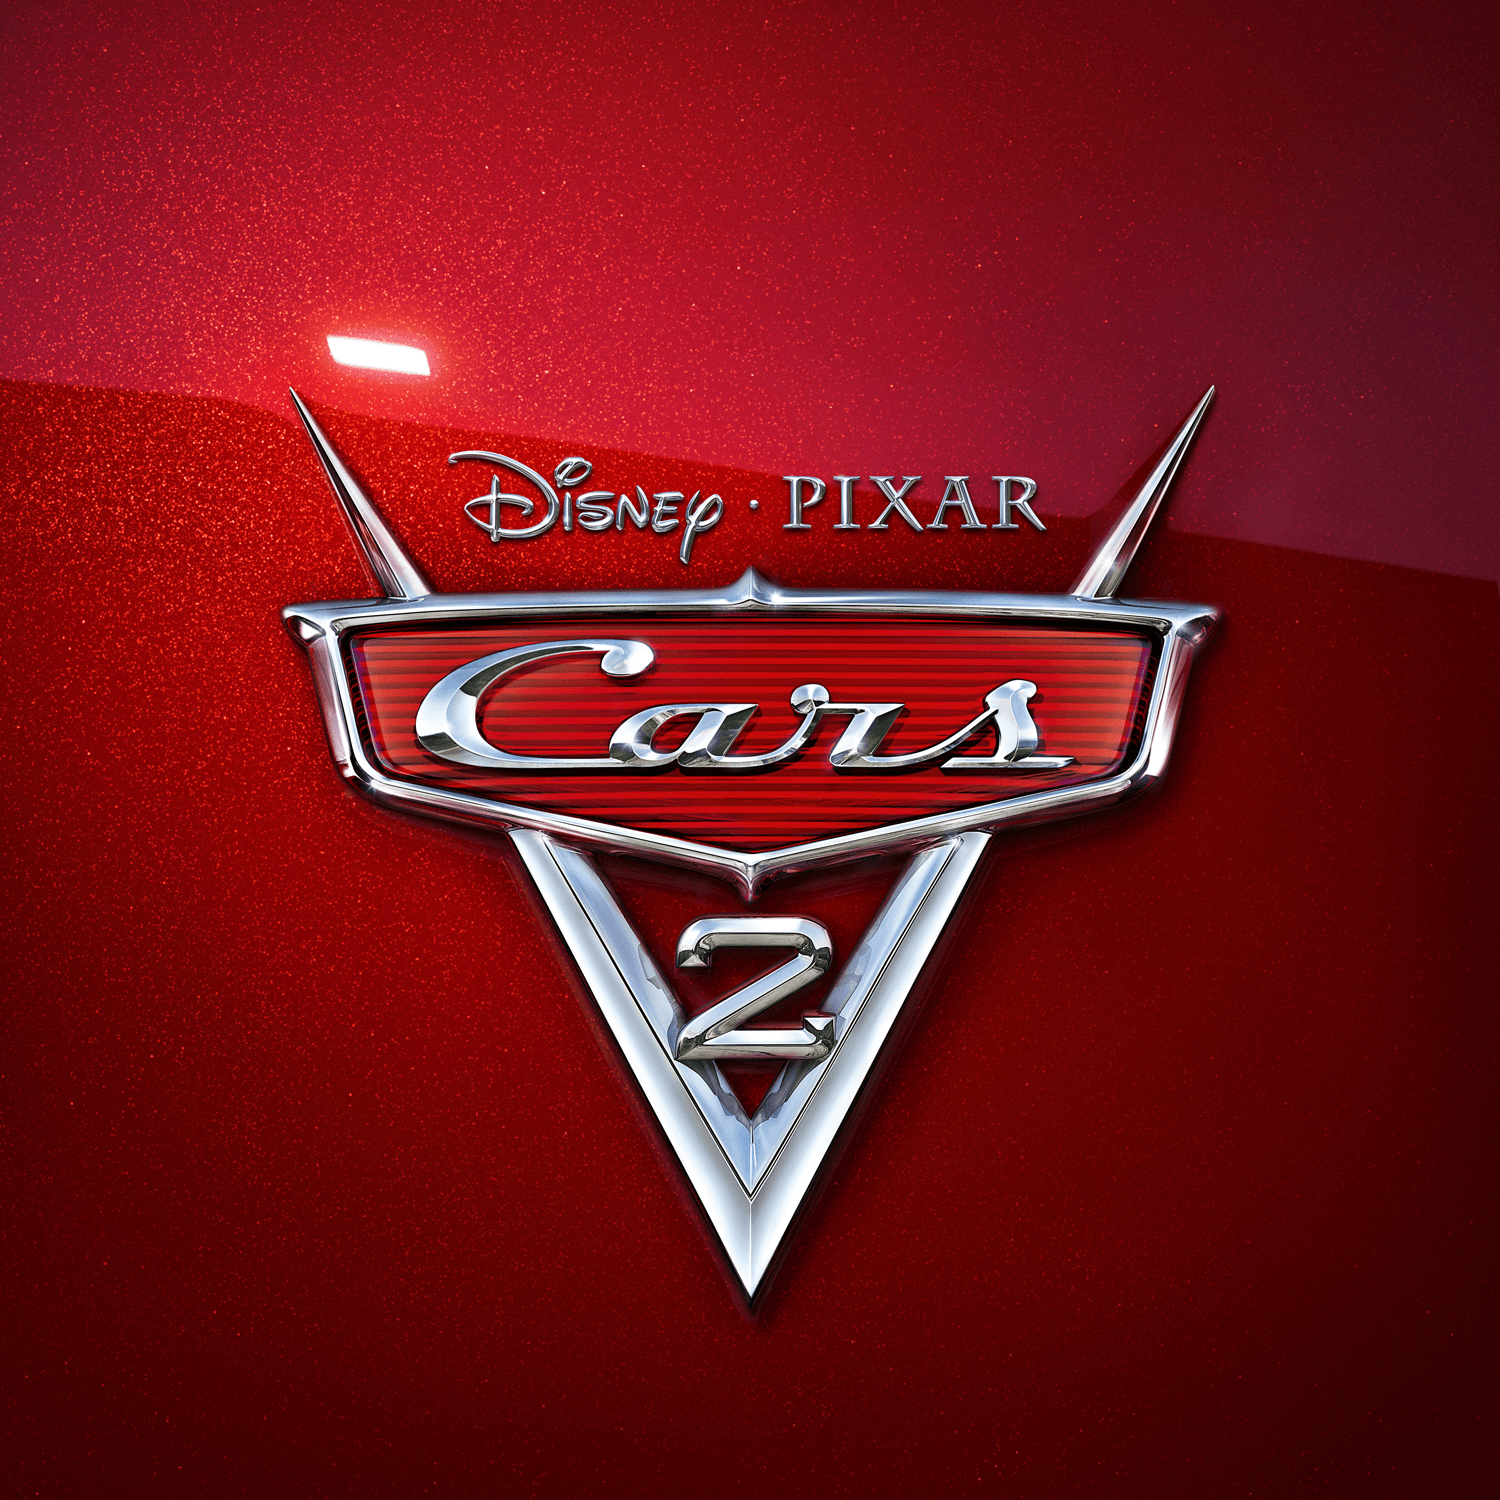 Disney Pixar Cars 2 Logo - Cars 2 Updated Logo